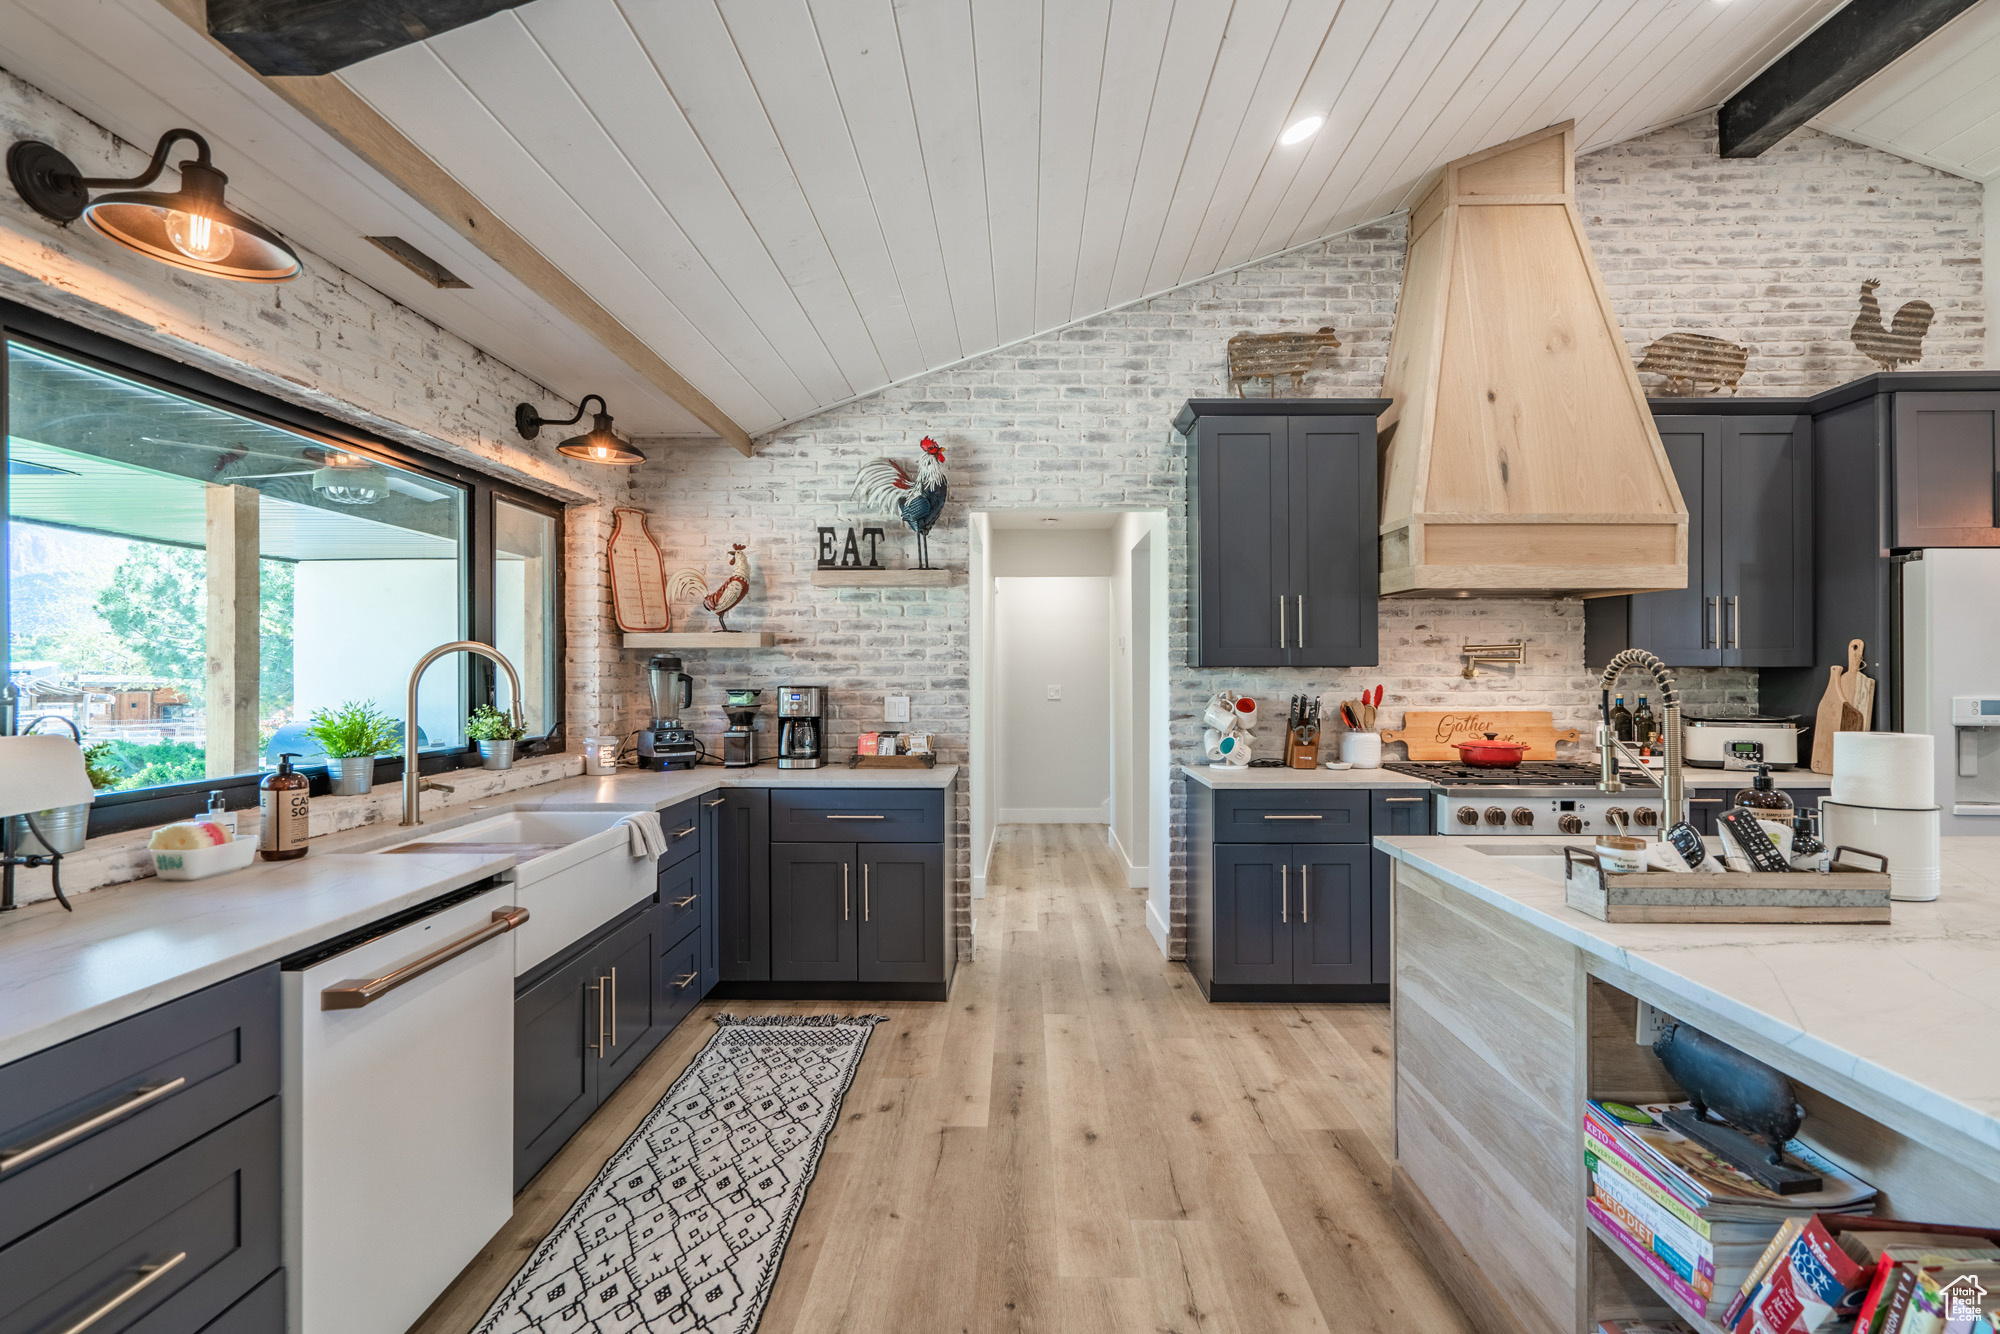 Kitchen featuring white appliances, light hardwood / wood-style flooring, custom range hood, backsplash, and vaulted ceiling with beams